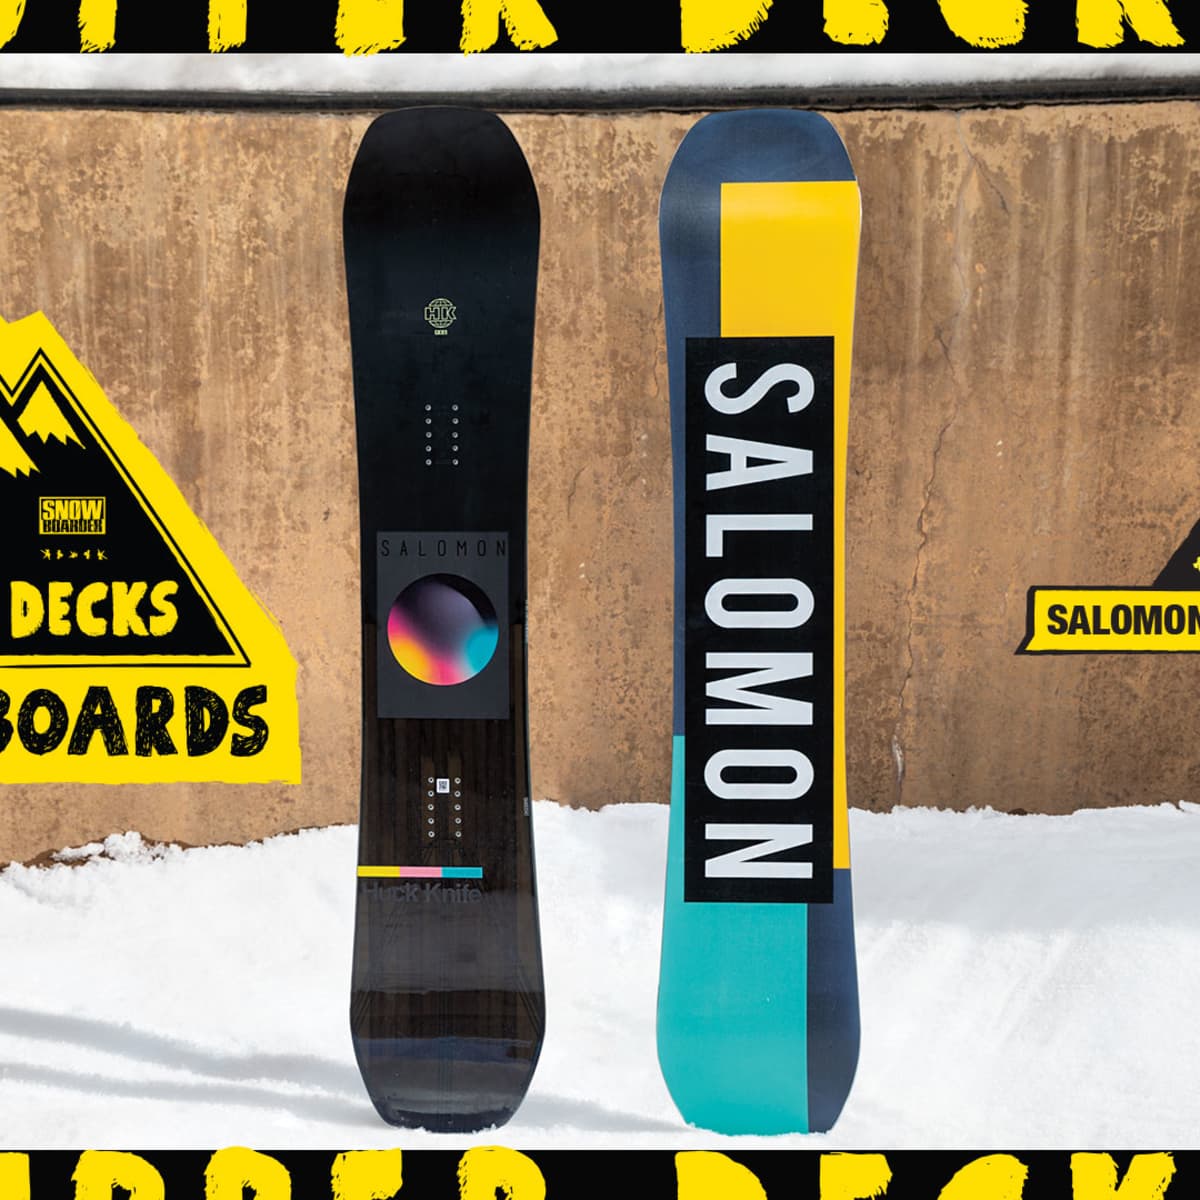 2020 Upper Decks Park Boards: Salomon Huck Knife Pro - Snowboarder